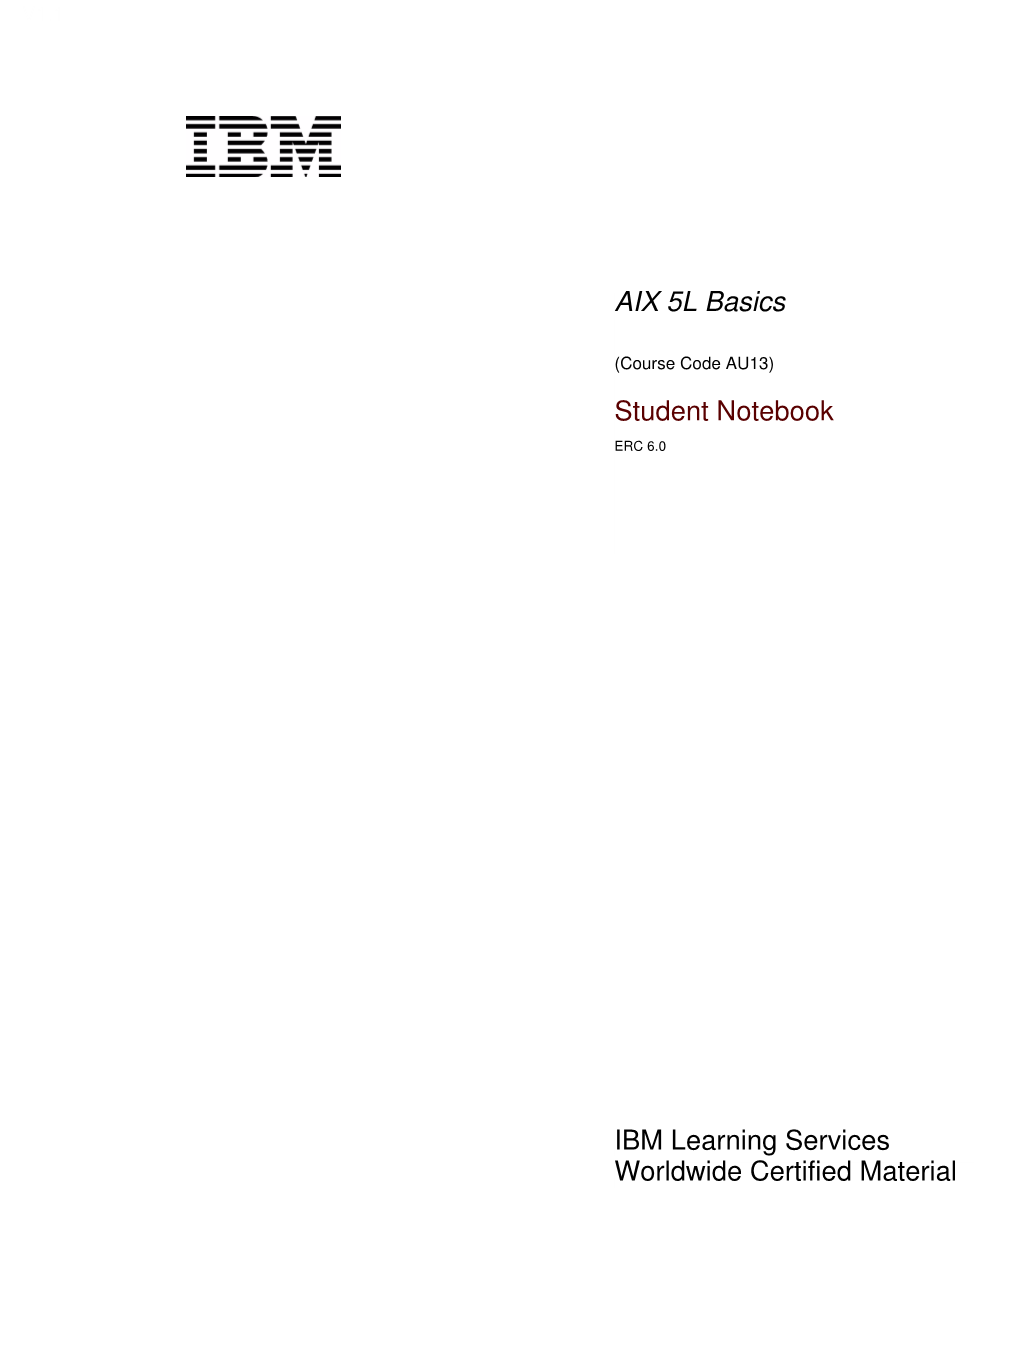 AIX 5L Basics Student Notebook Worldwide Certified Material IBM